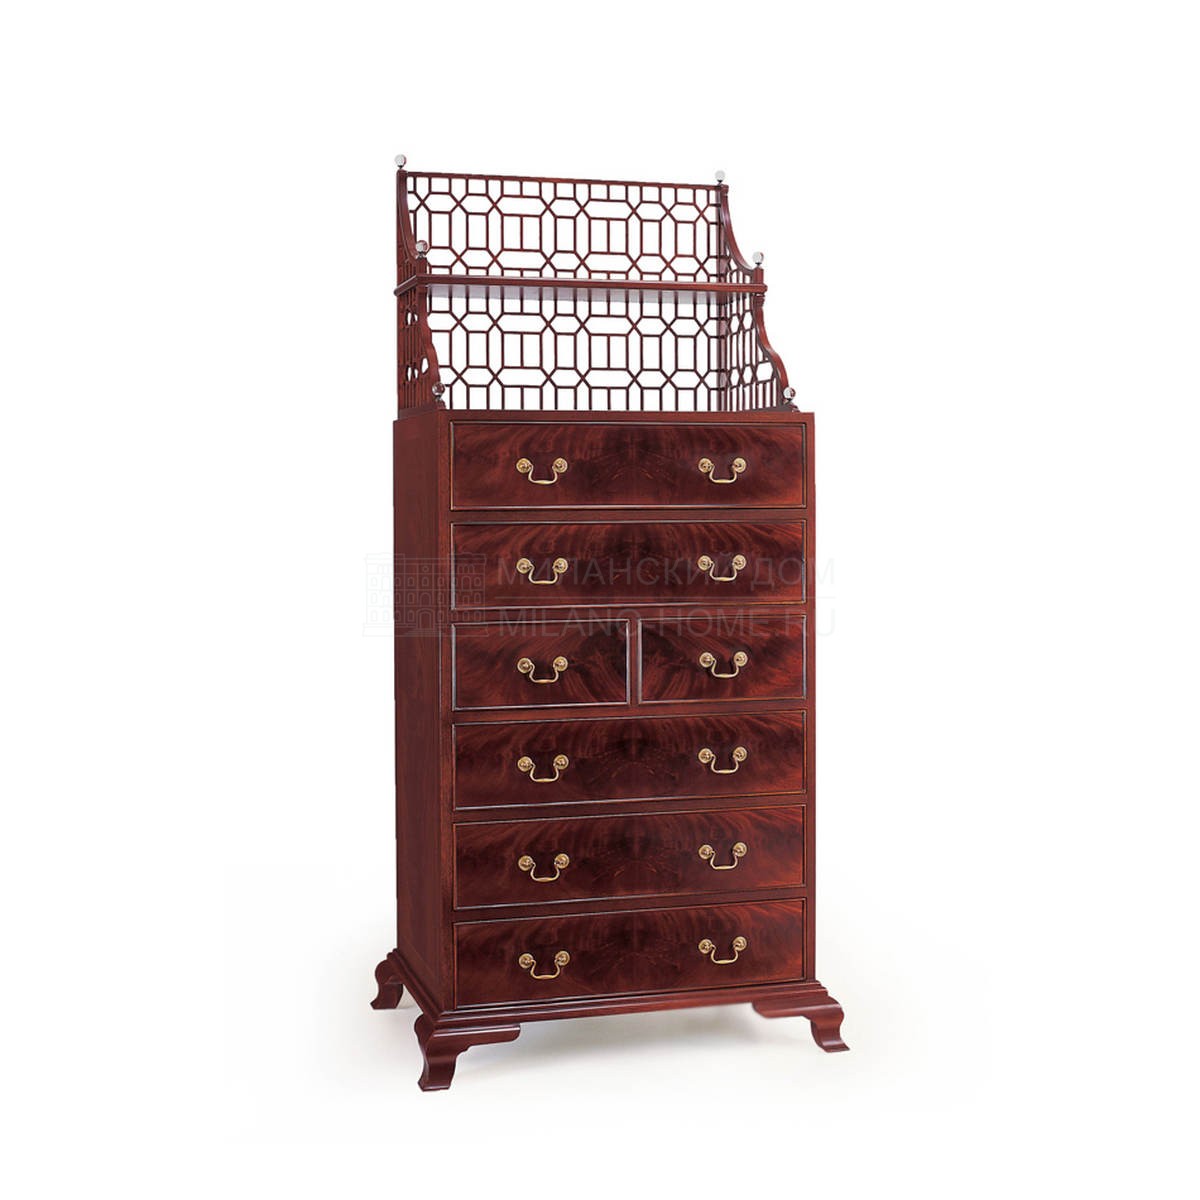 Комод Traditional tall chest with 7 drawers / art.26008 из США фабрики BOLIER